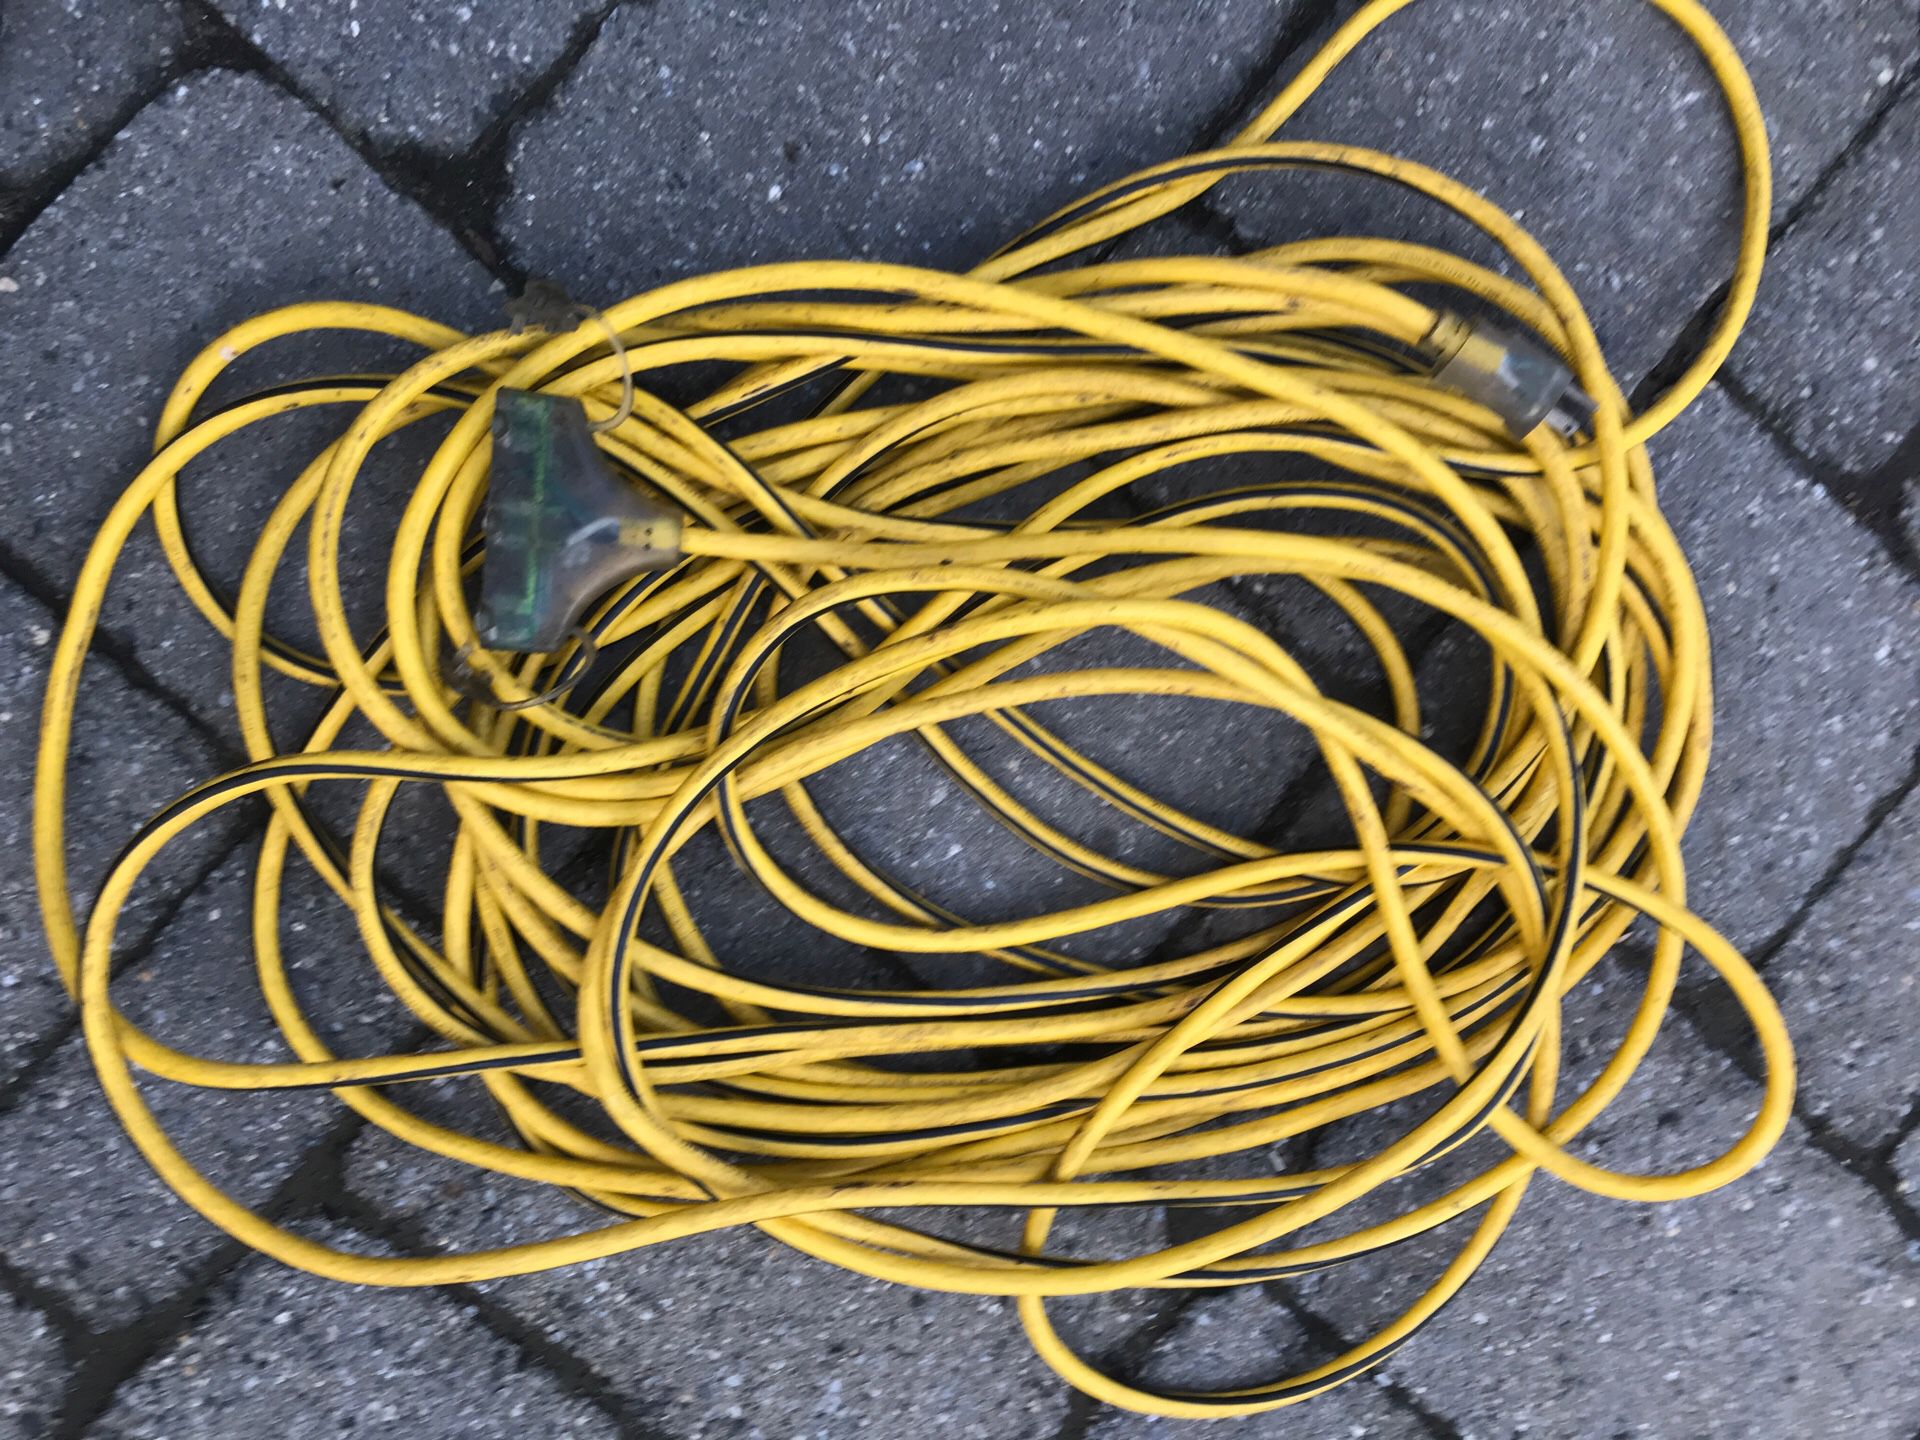 100 foot 12-3 industrial grade power cord